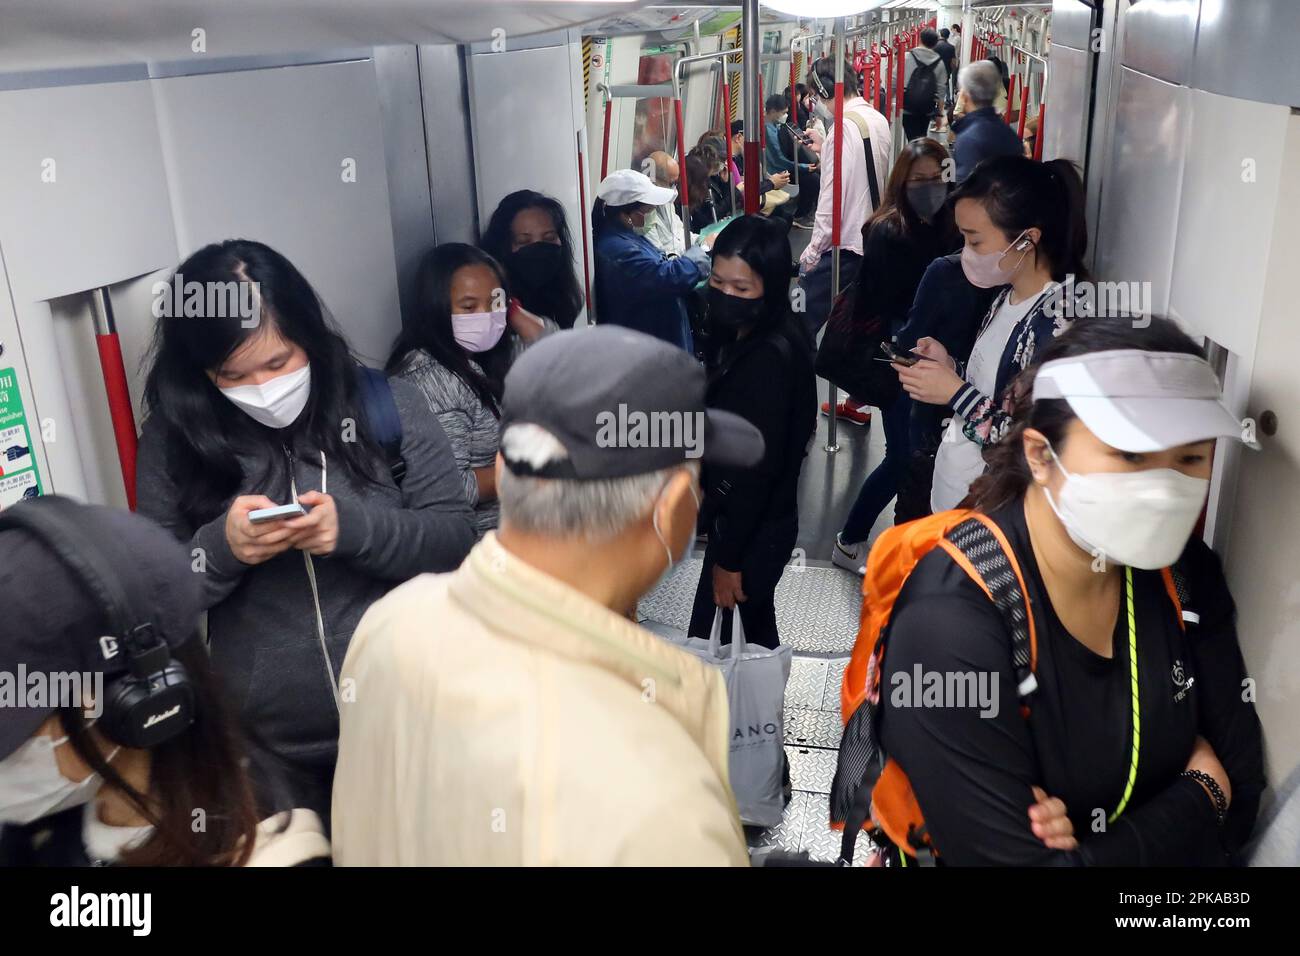 10.12.2022, China, Hong Kong, Hong Kong - People in an underground compartment wearing FFP2 masks. 00S221210D765CAROEX.JPG [MODEL RELEASE: NO, PROPERT Stock Photo